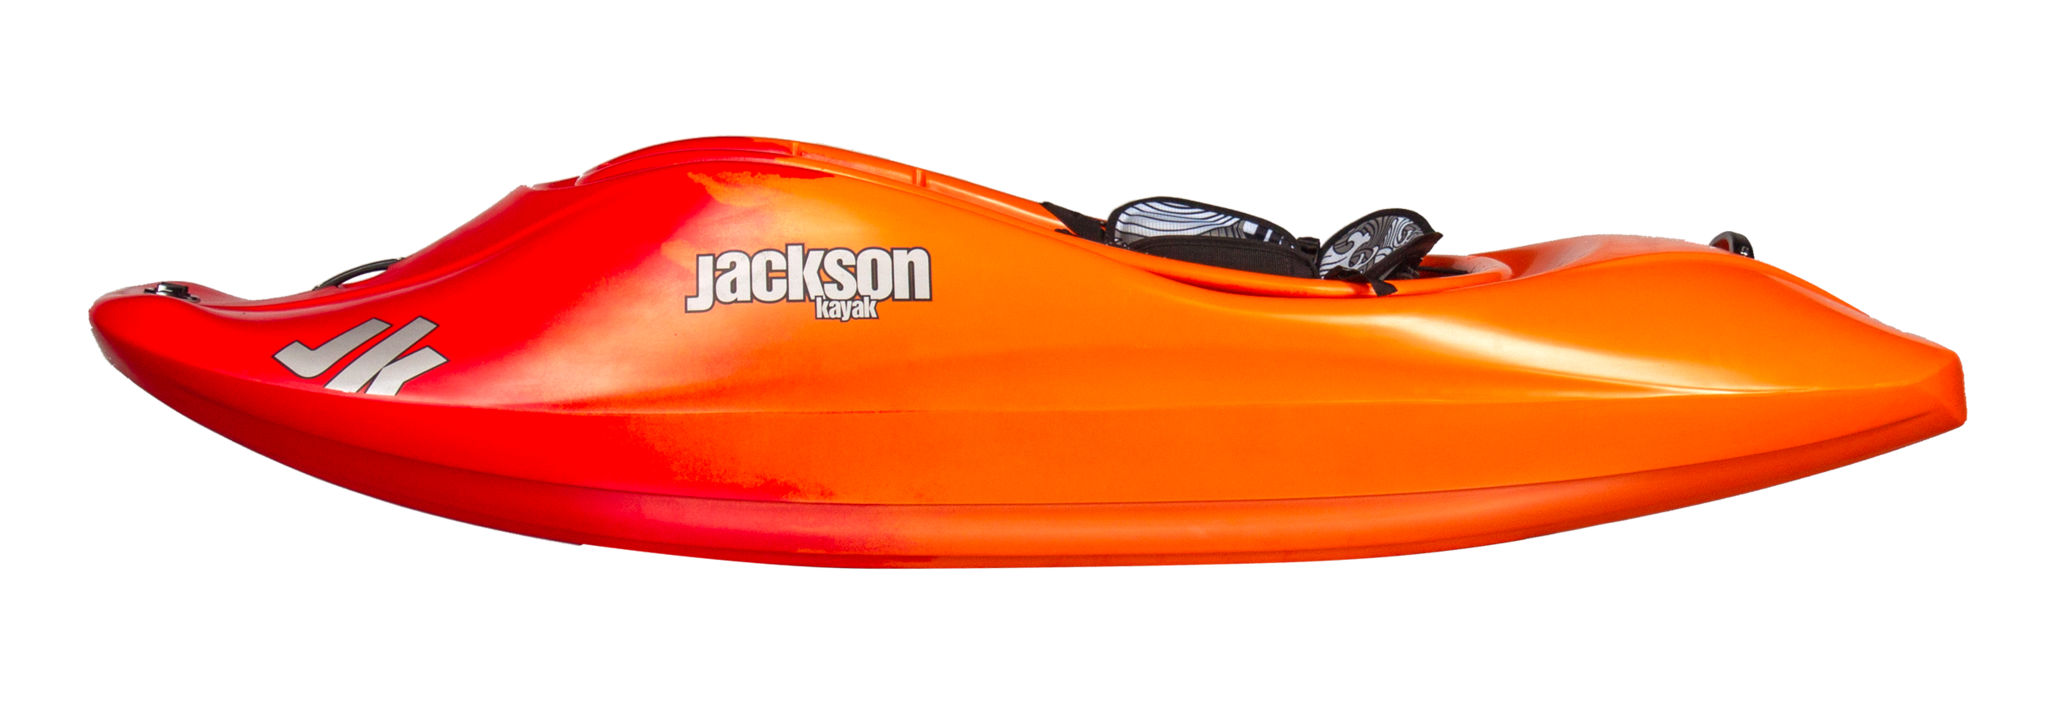 Jackson Kayak - RockStar V - SM